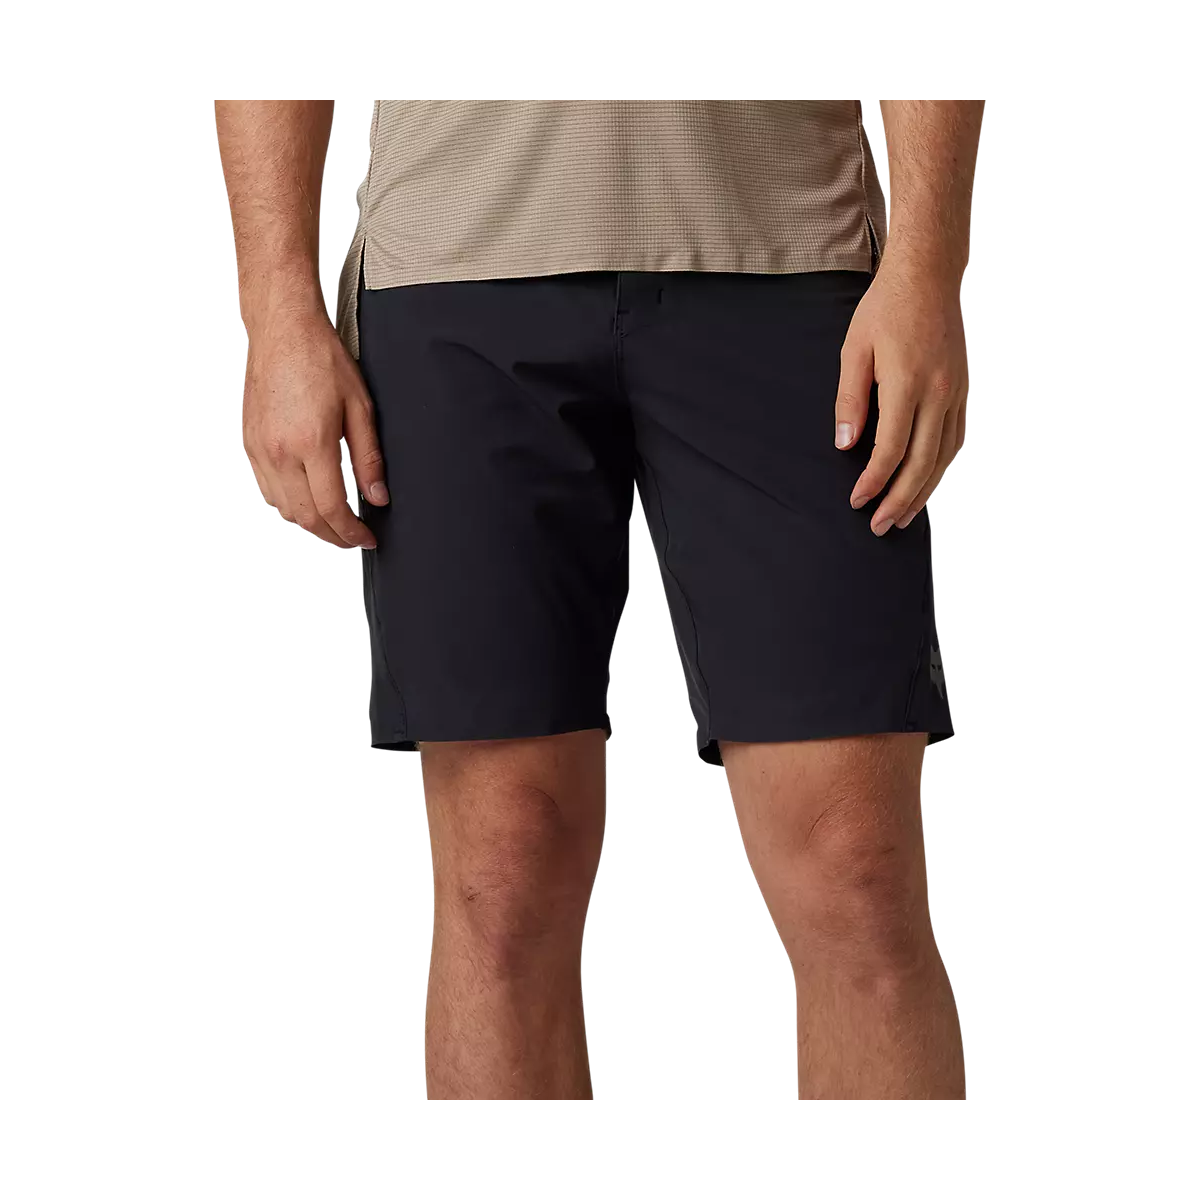 Pantalón corto Fox Flexair Ascent en color negro con badana extraible de tallaje estrecho 30652-001